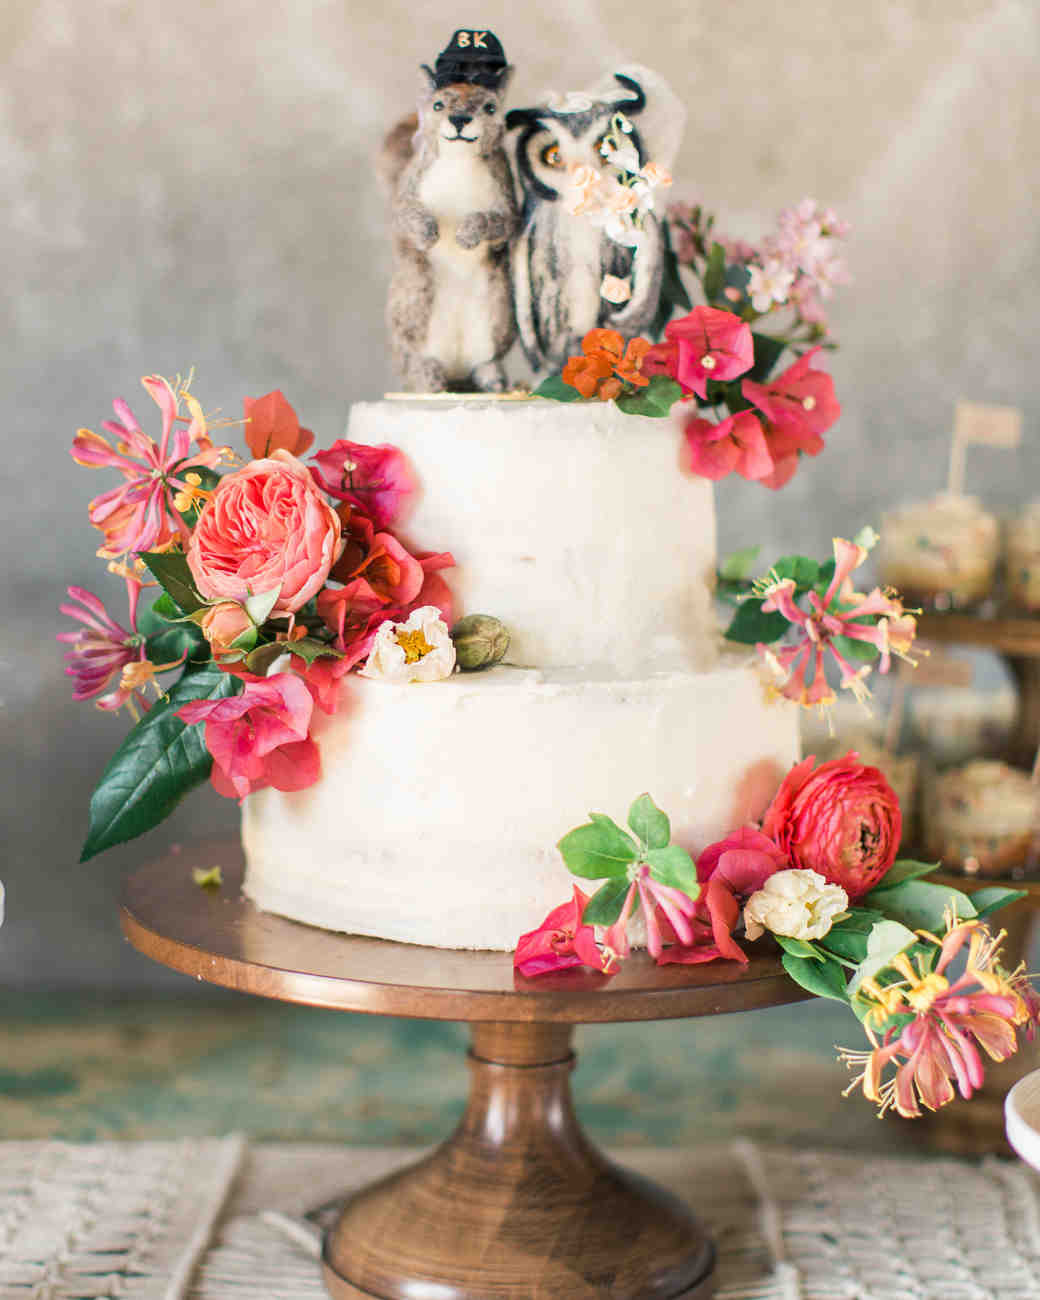 Best Wedding Cakes
 The 25 Best Wedding Cakes